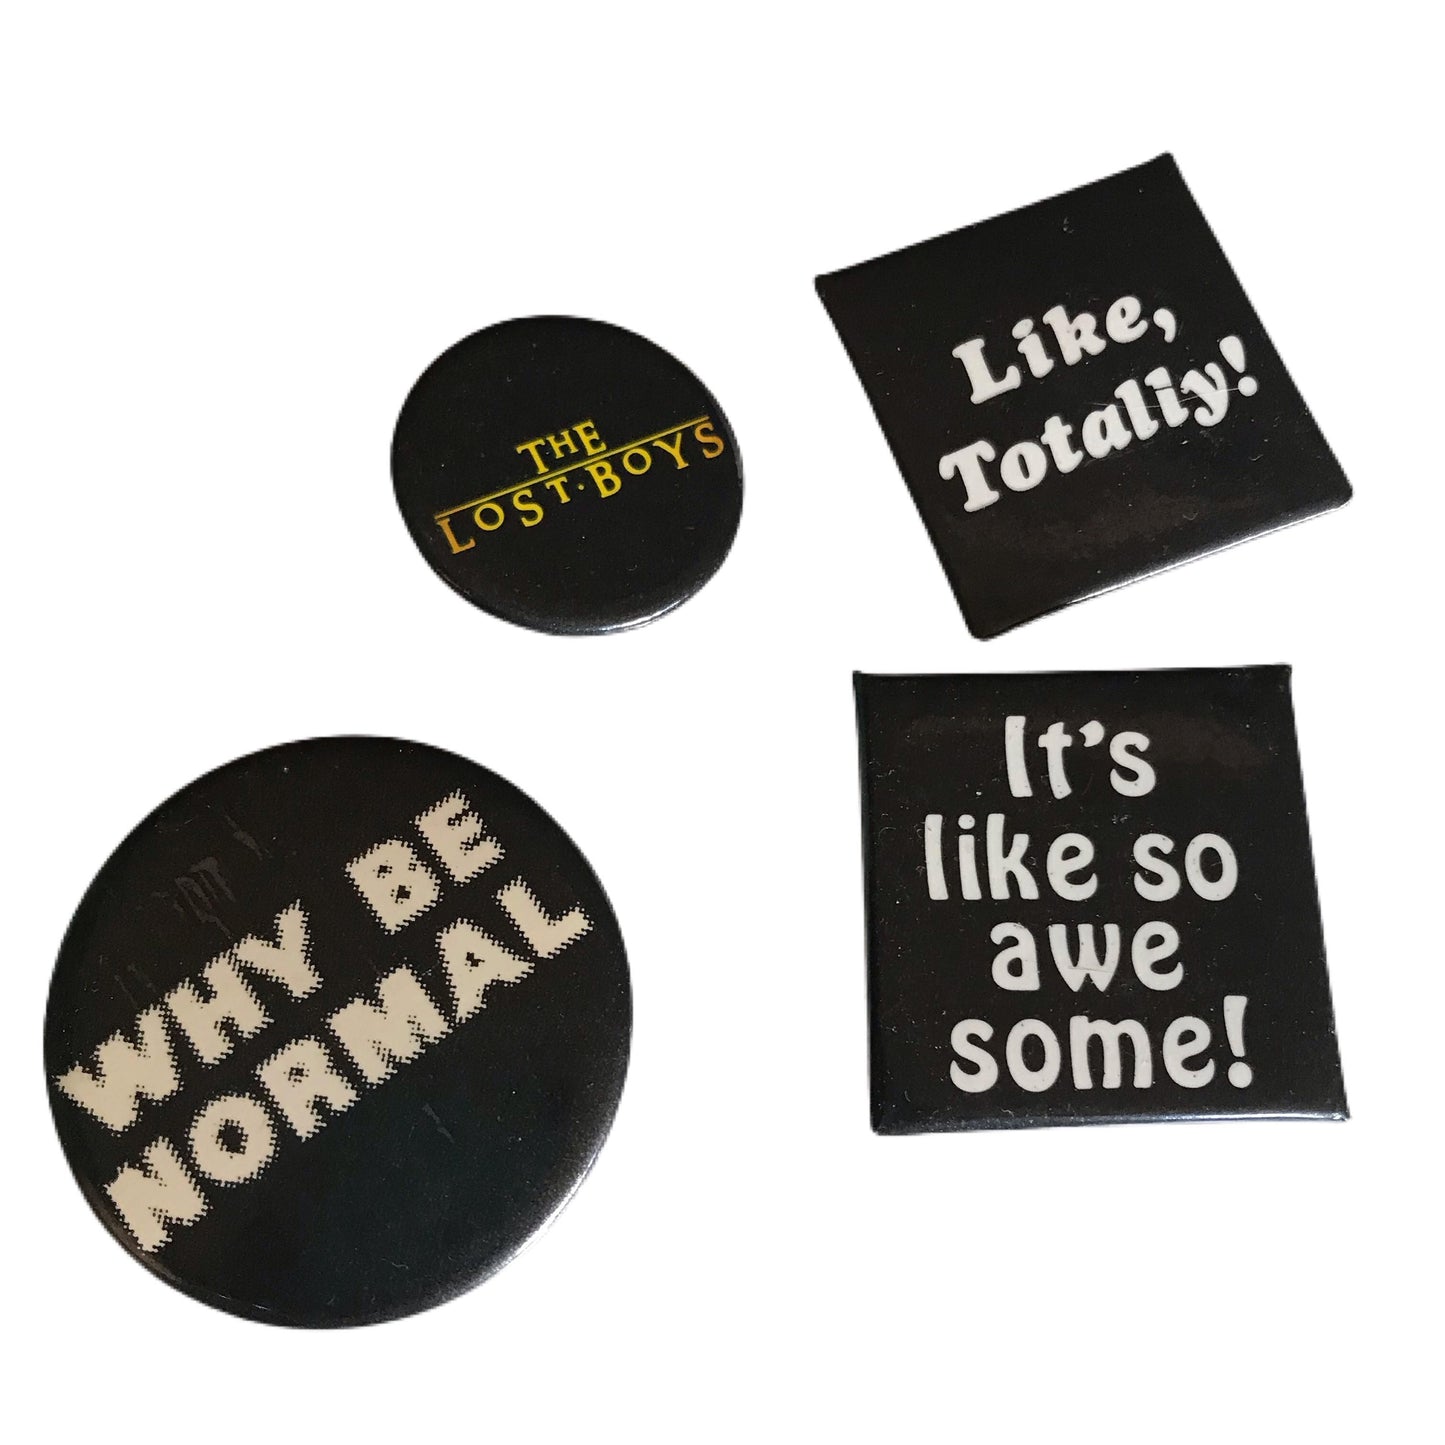 80s Catch Phrases + Lost Boys Pin Button Collection circa 1980s